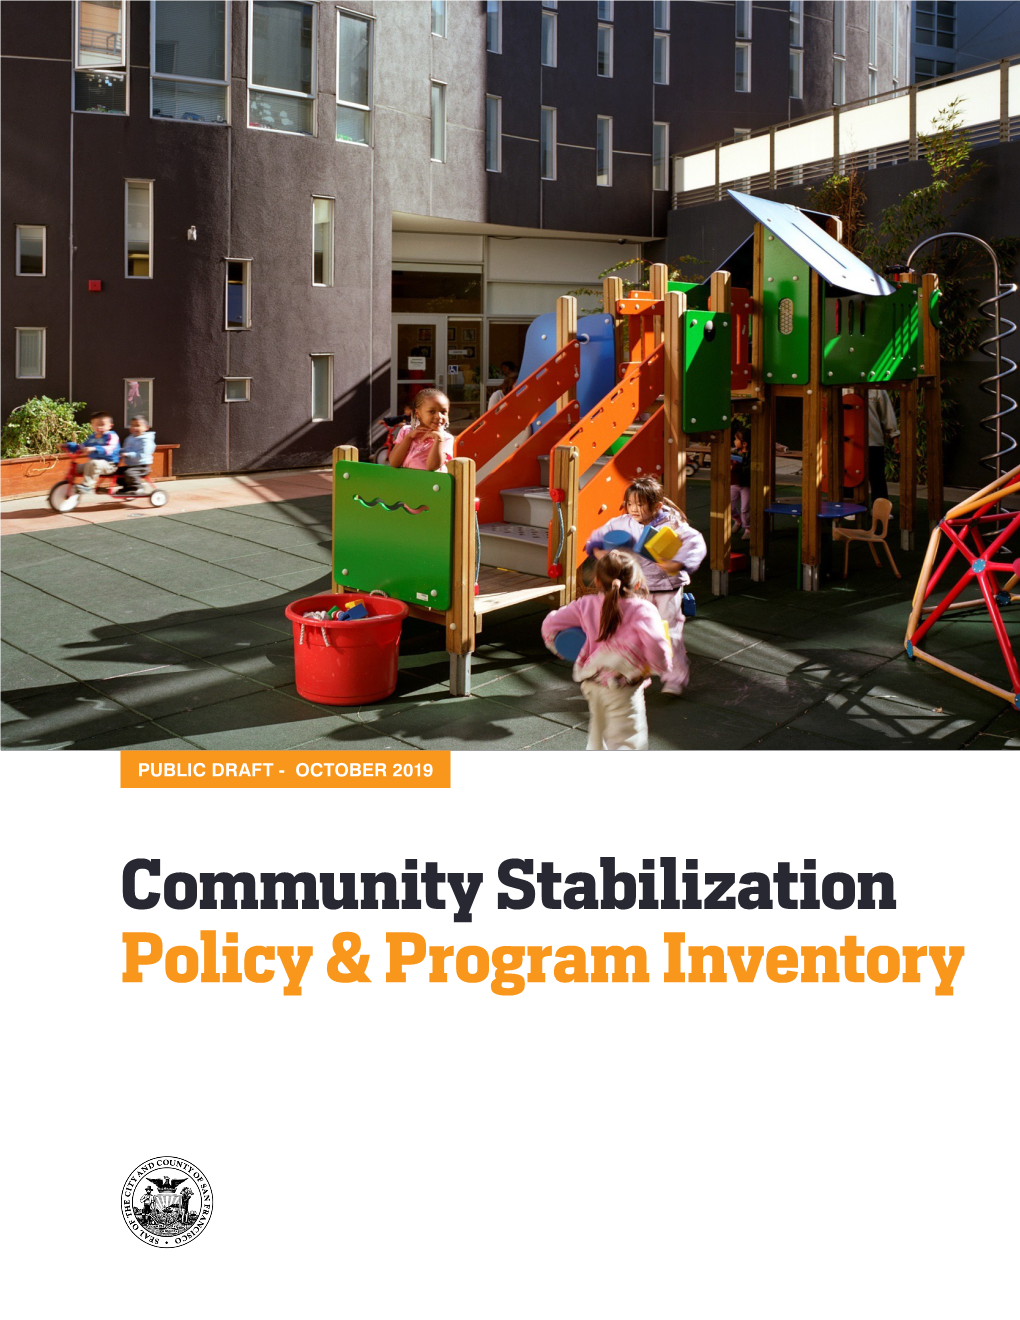 Community Stabilization Policy & Program Inventory